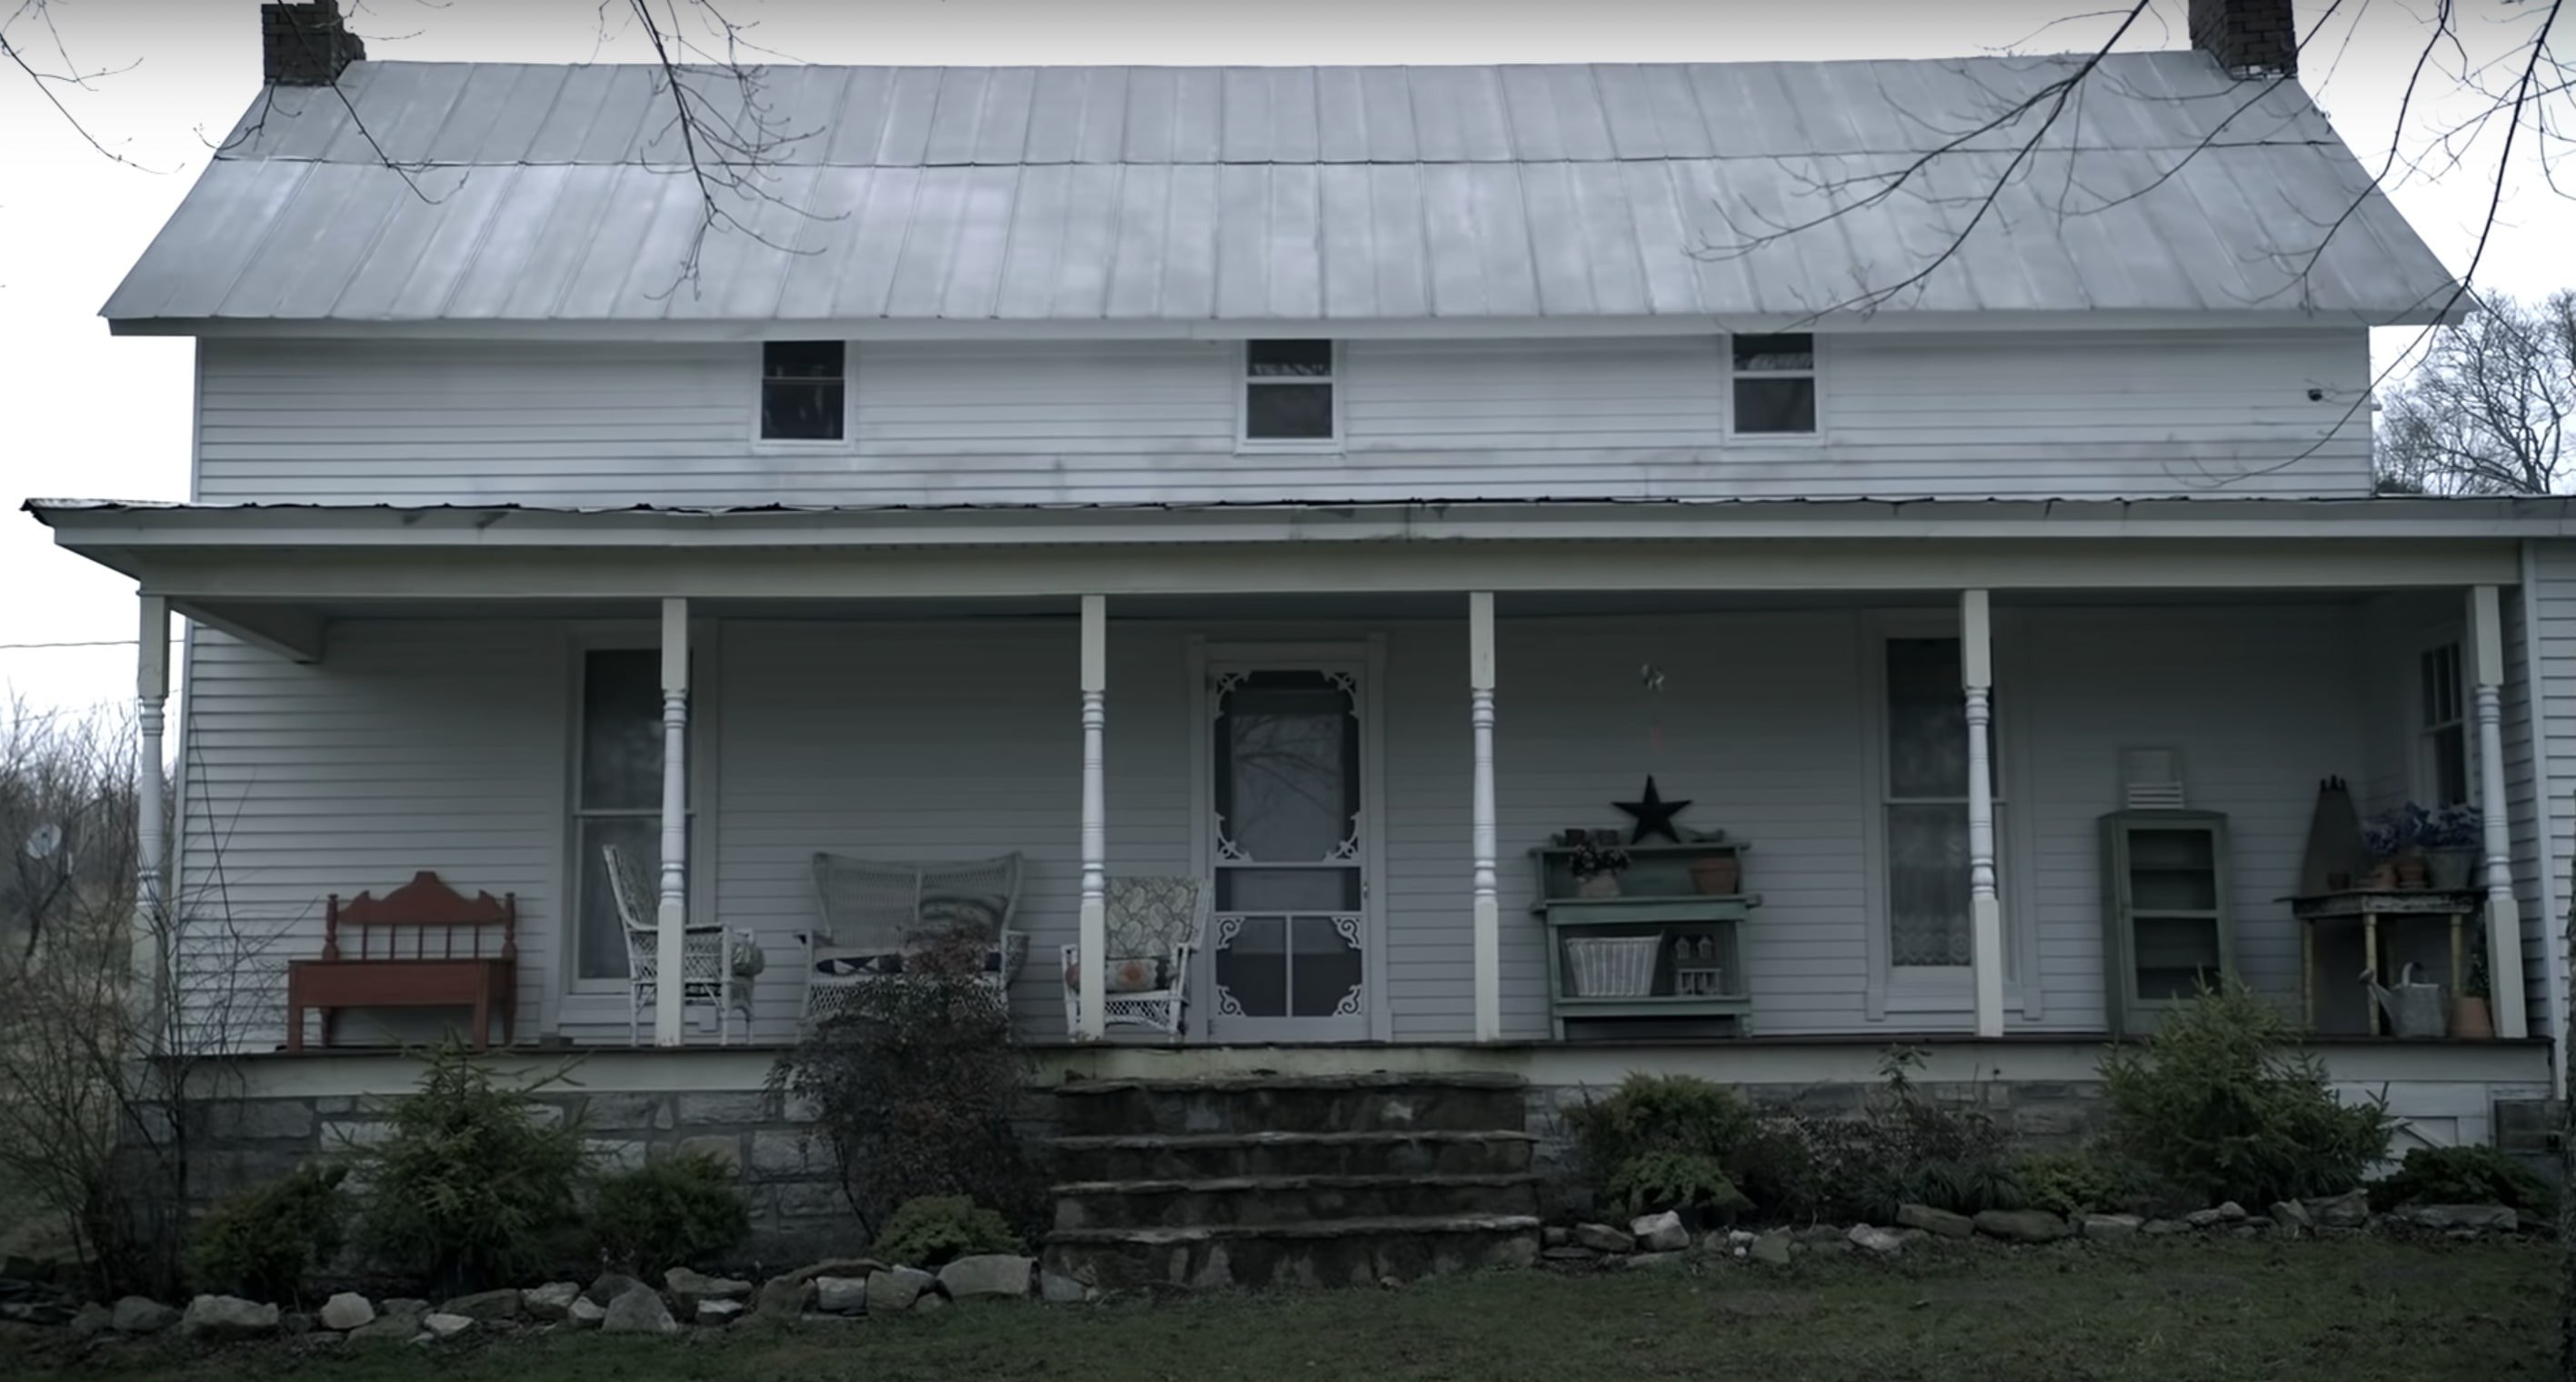 An old house as seen in Miranda Lambert's song "The House That Built Me" | Source: YouTube/@mirandalambert